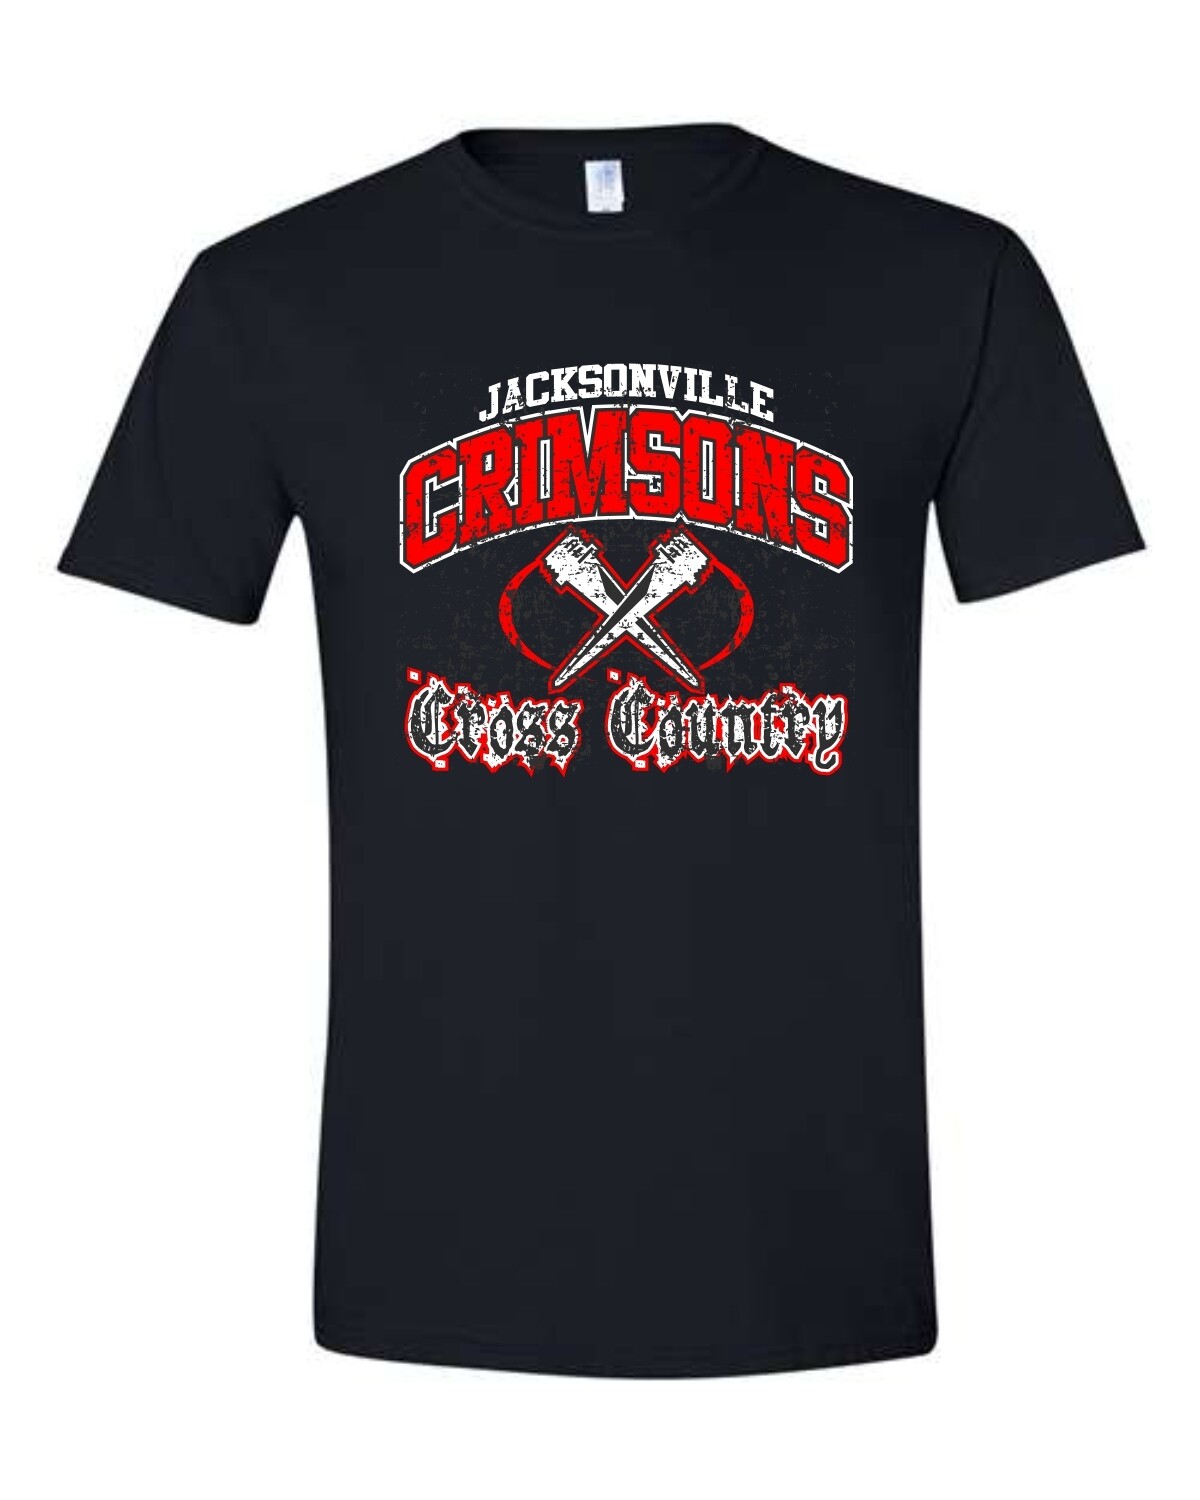 CC-CRIMSONS 64000
BLACK Soft Style T-shirt